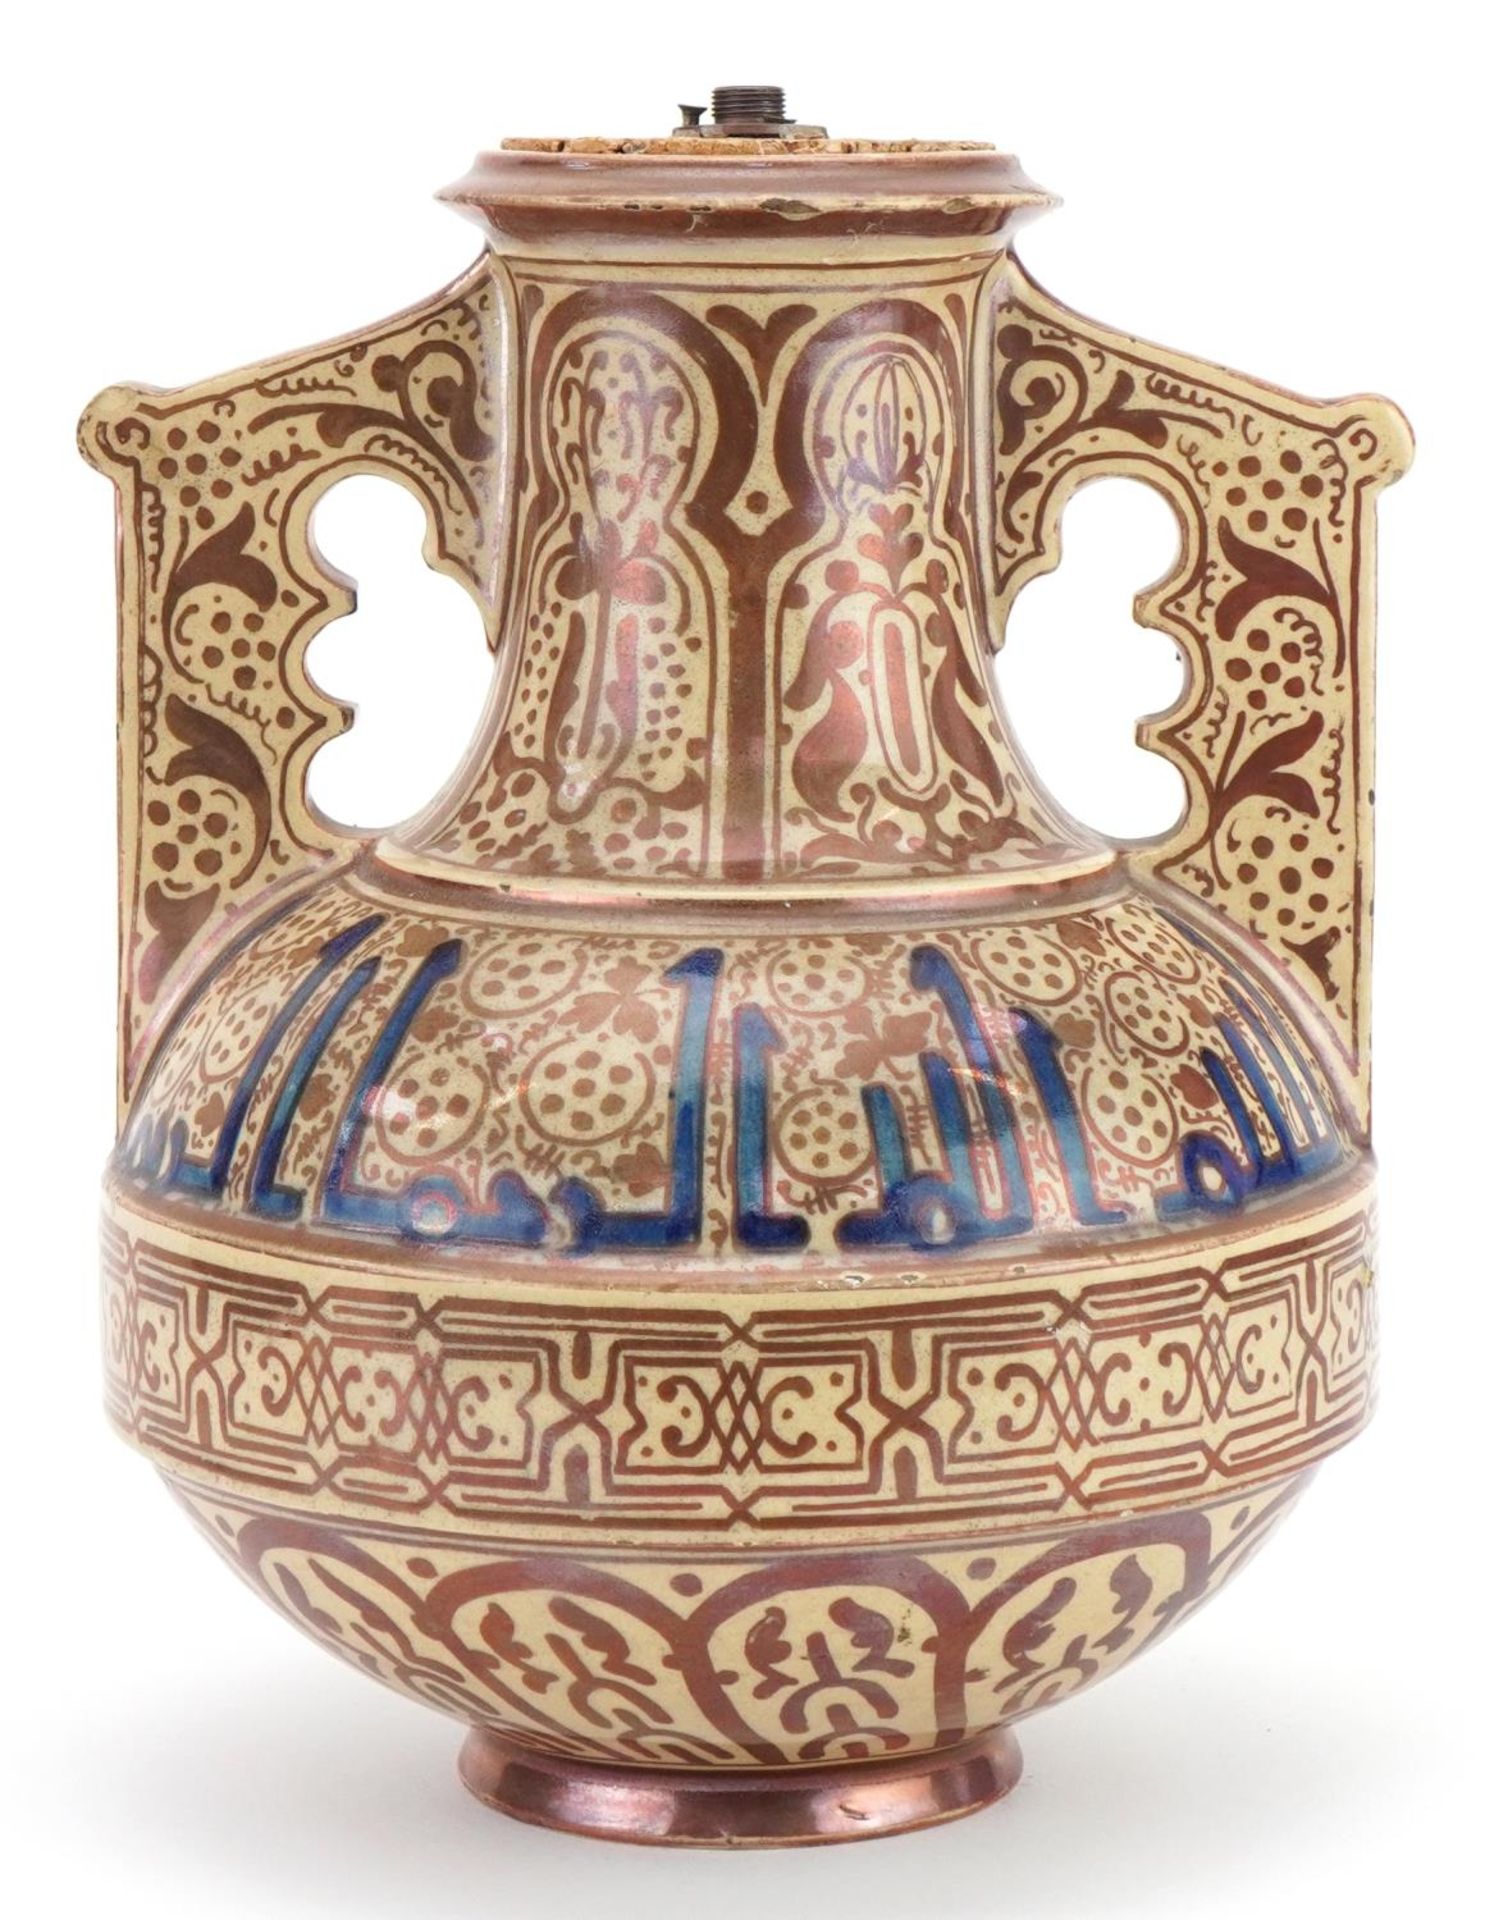 Hispano-Moresque, Antique Spanish lustre vase hand painted with stylised foliage and Islamic